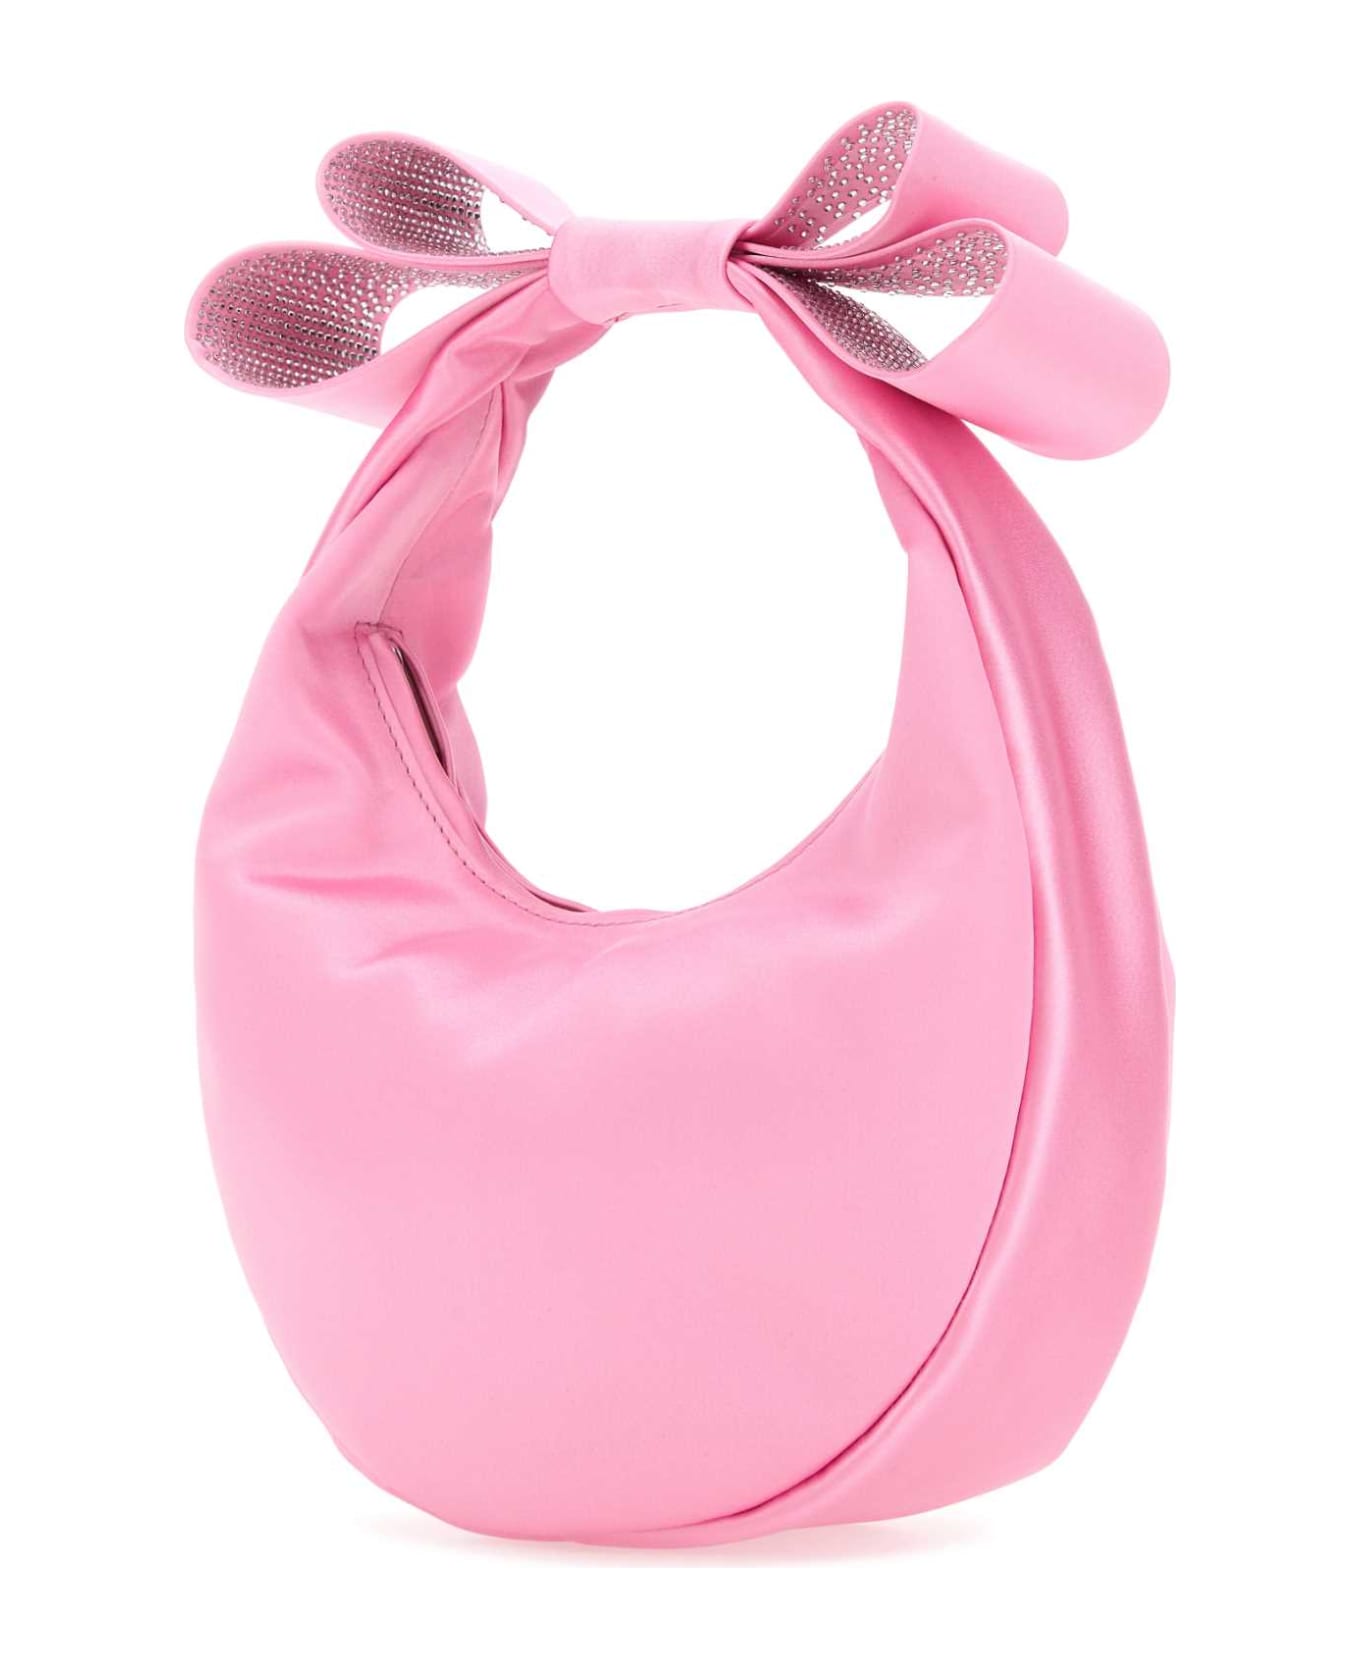 Mach & Mach Pink Satin Small Cadeau Handbag - PINK